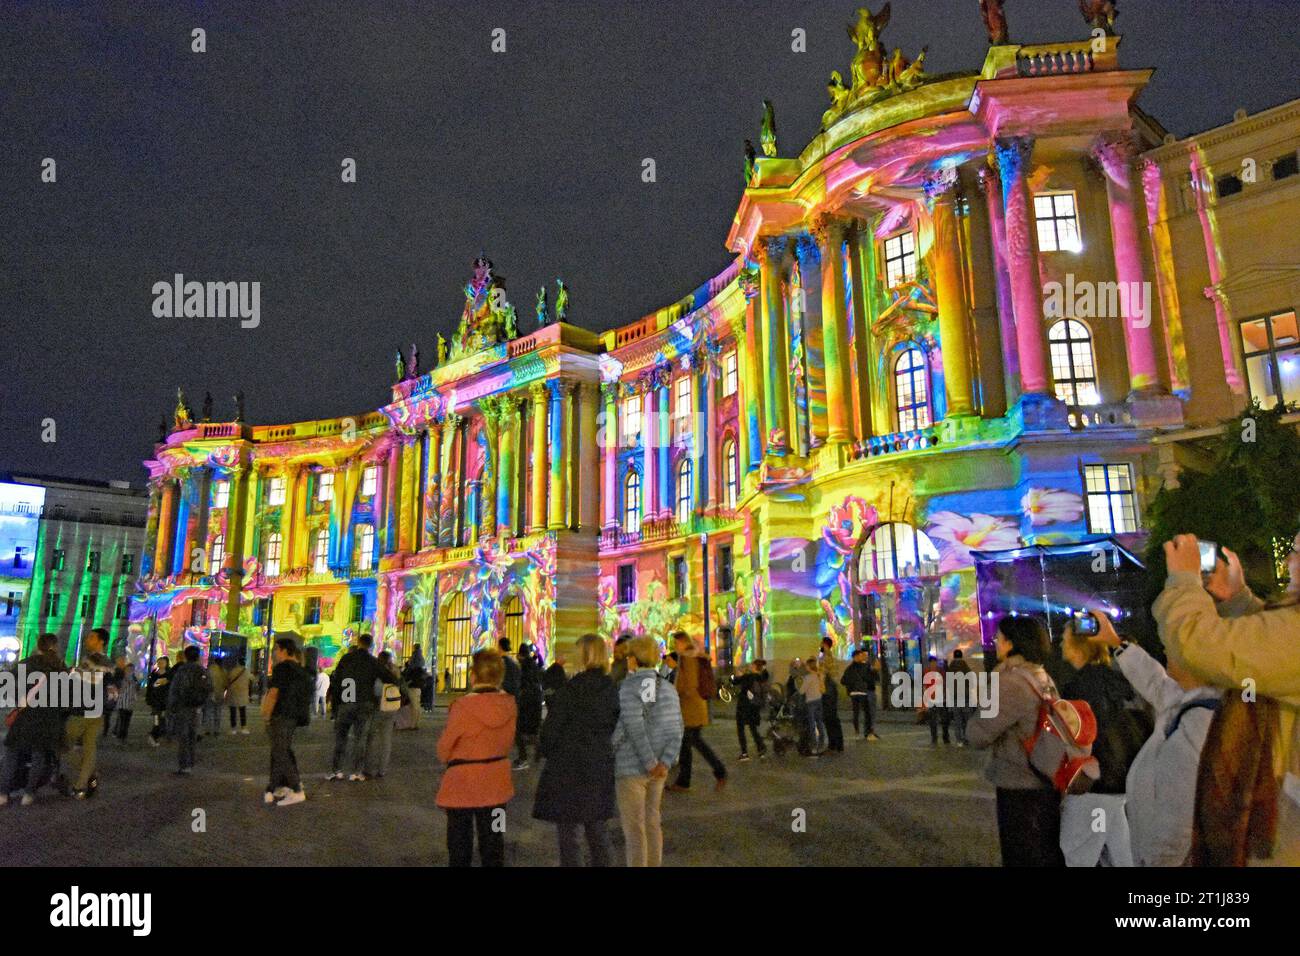 Berlin im Farbenrausch, hier am Bebelplatz *** Berlin in a frenzy of color, here at Bebelplatz Credit: Imago/Alamy Live News Stock Photo